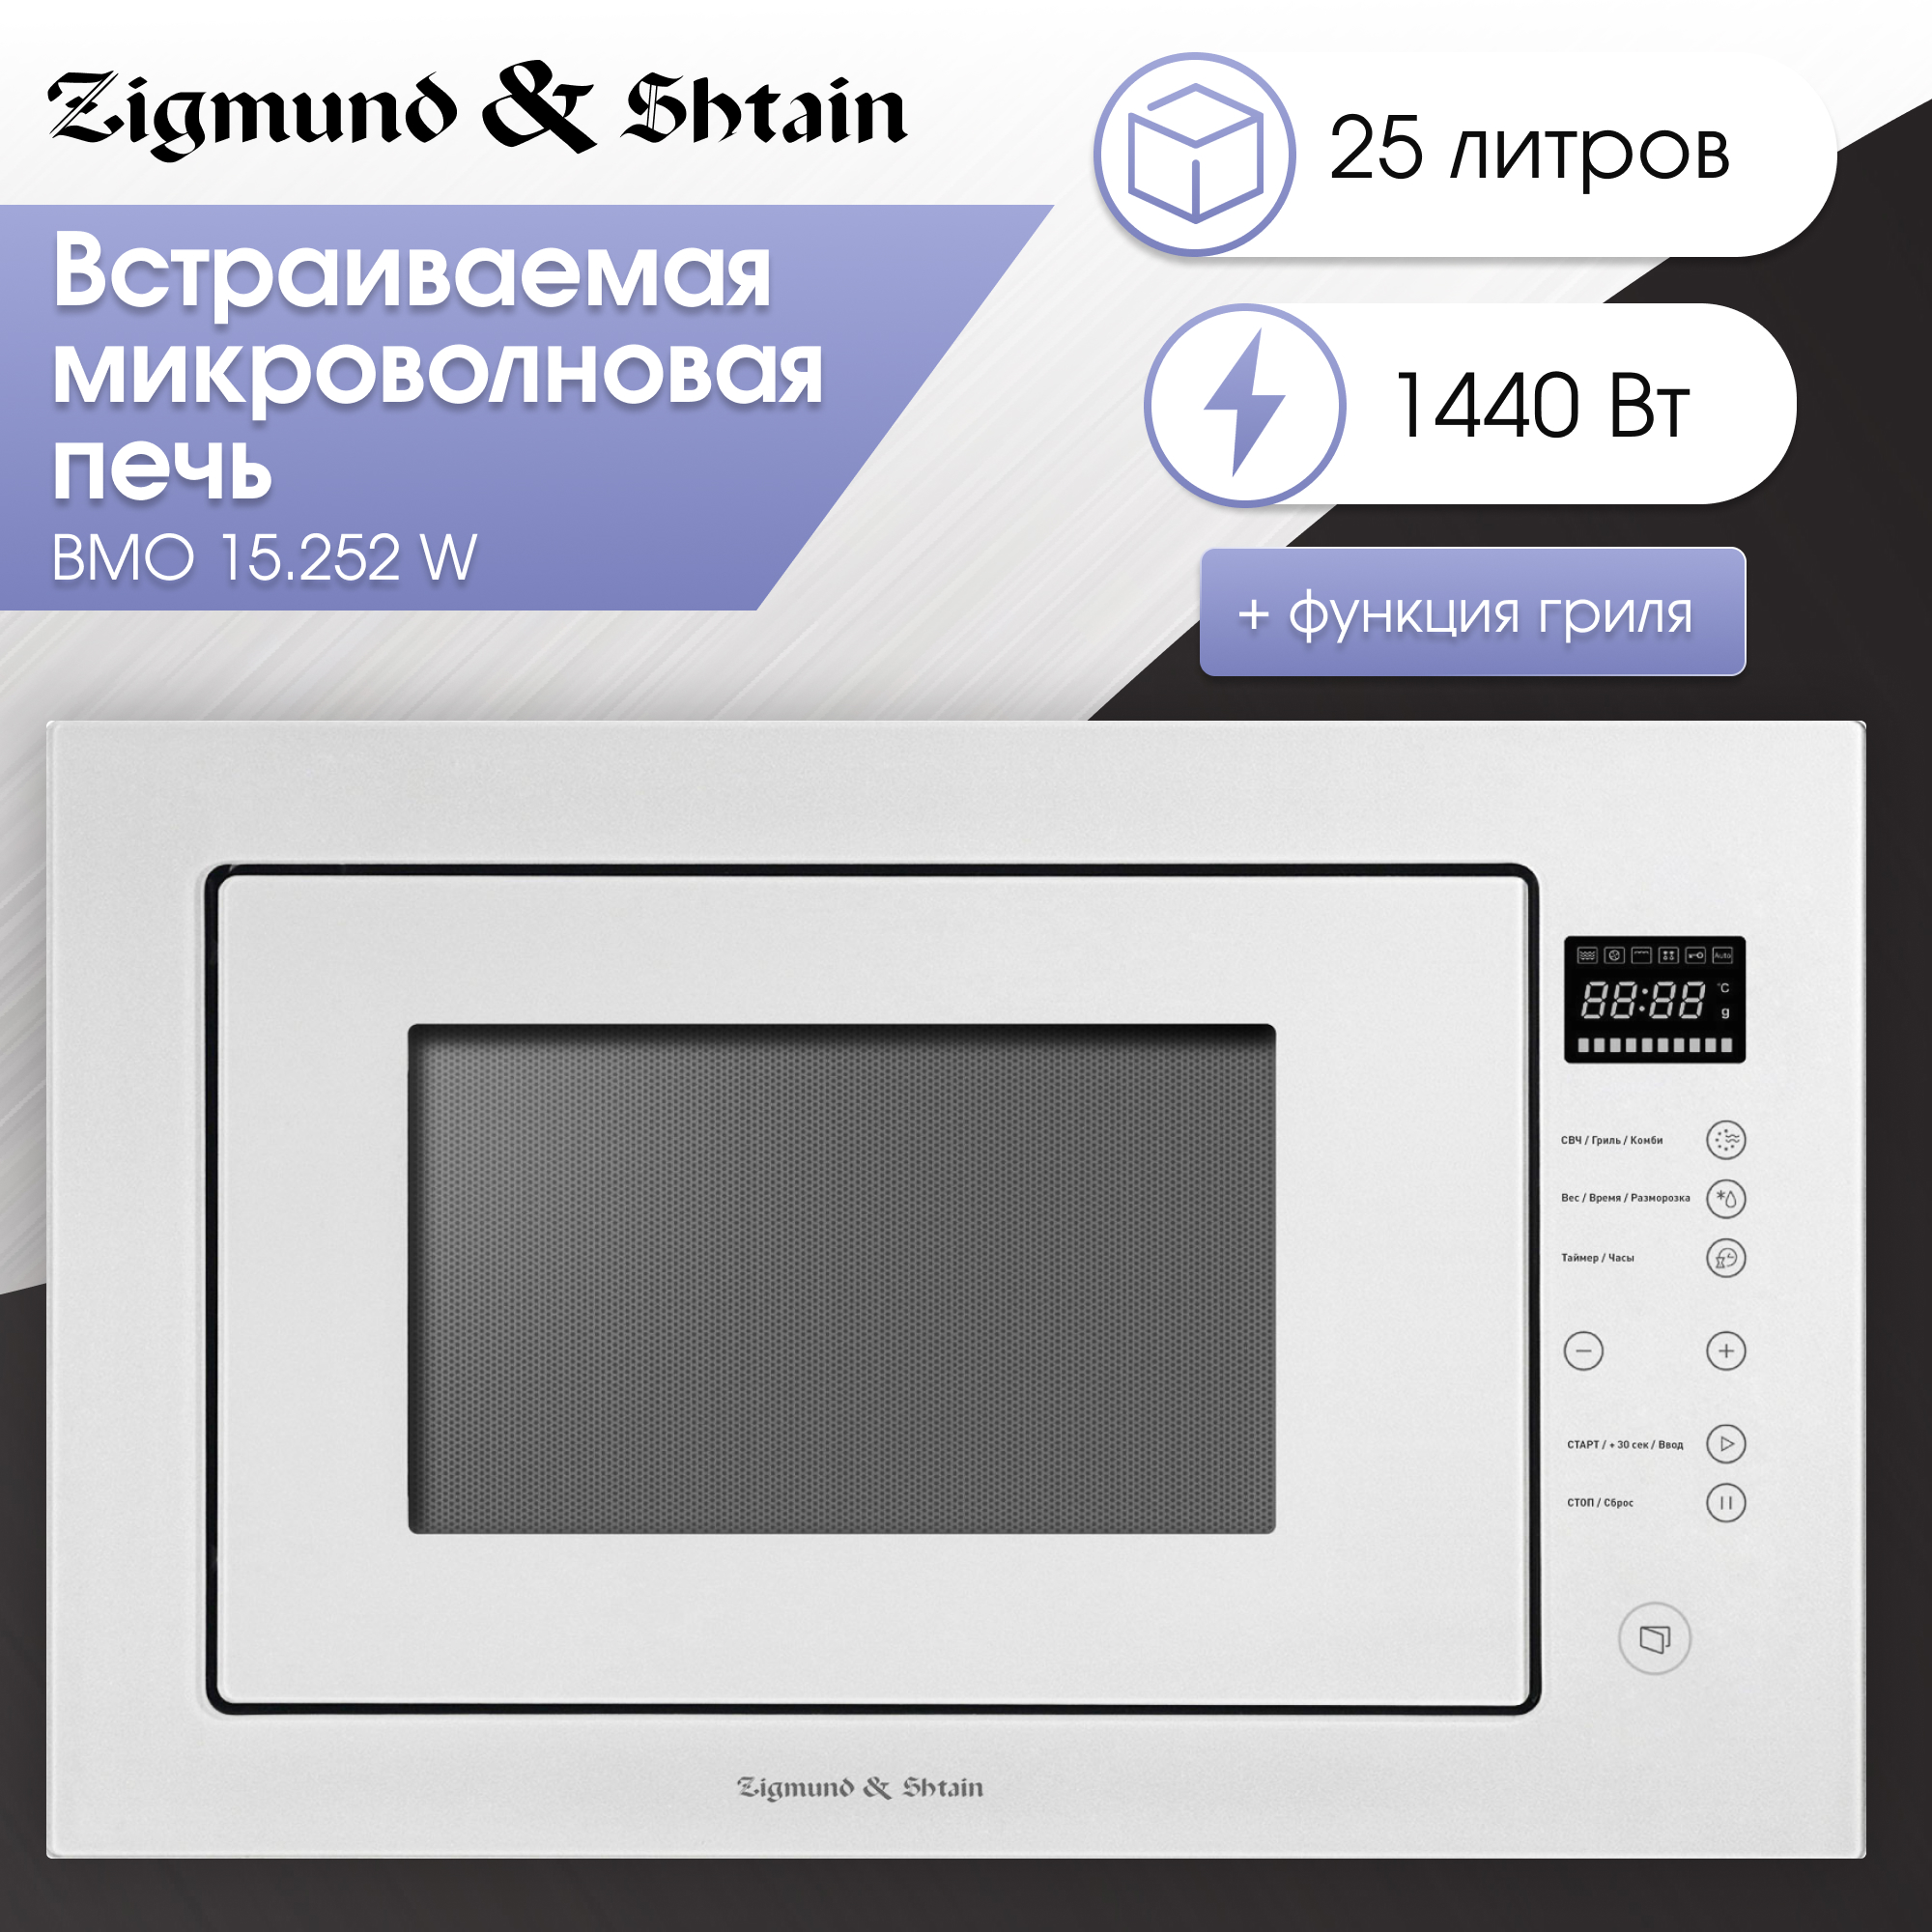 Встраиваемая микроволновая печь Zigmund & Shtain BMO 15.252 W White мини печь schaub lorenz sle ow4211 white